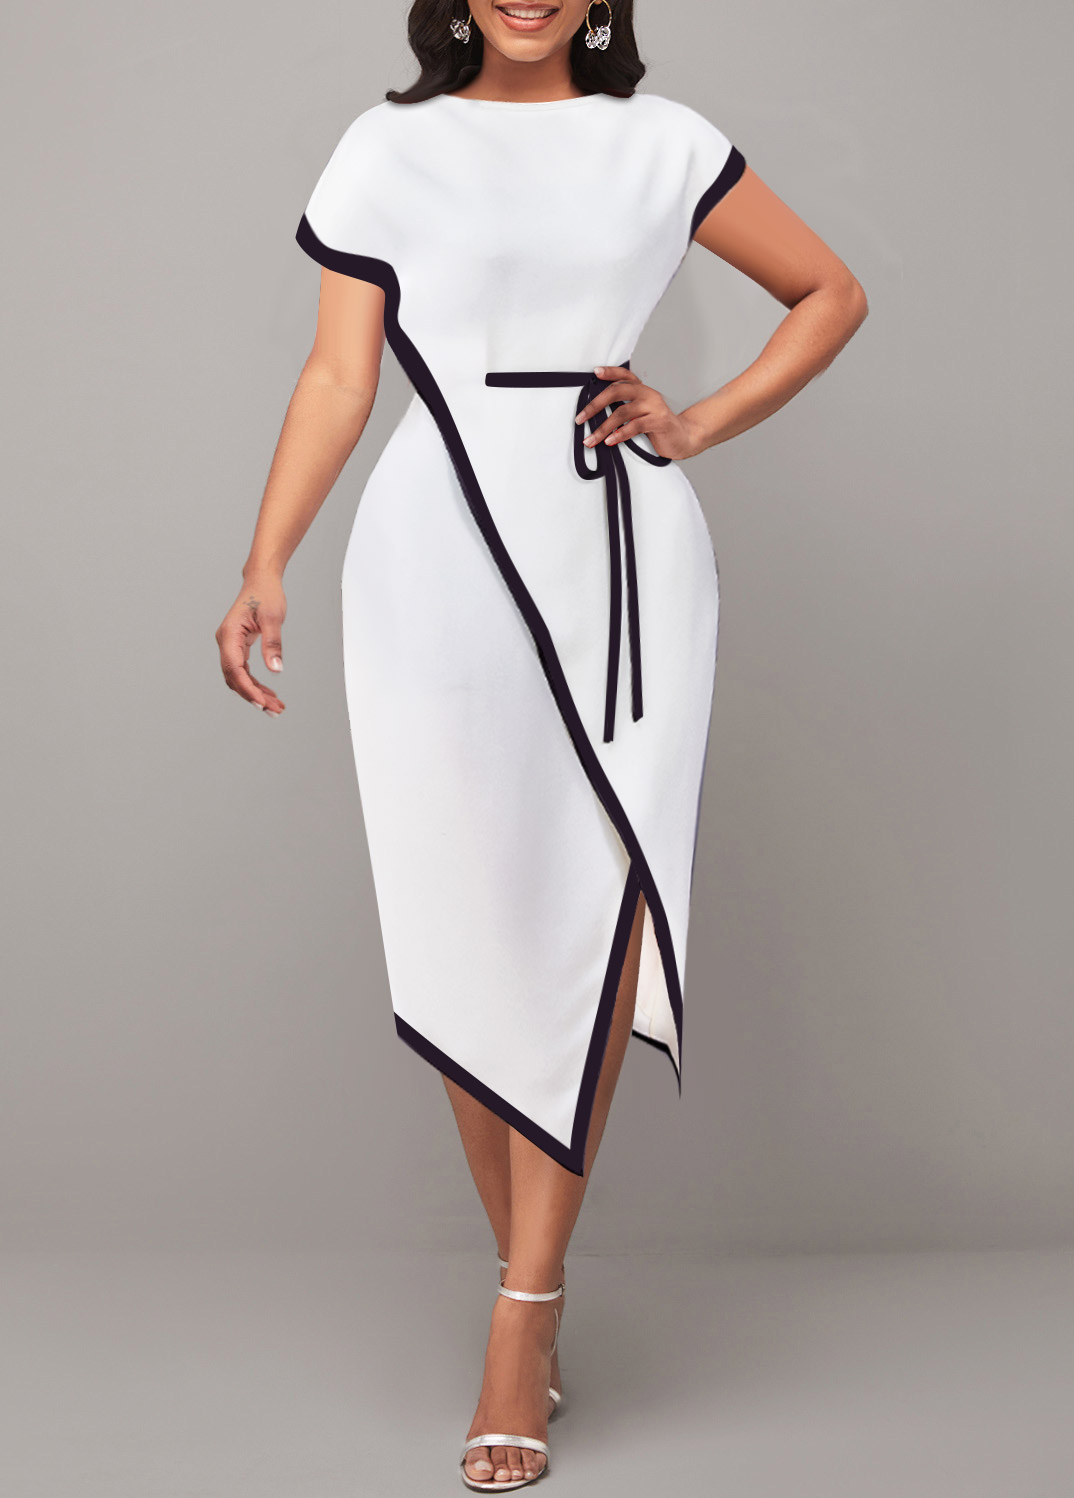 Contrast Stitch White Short Sleeve Dress